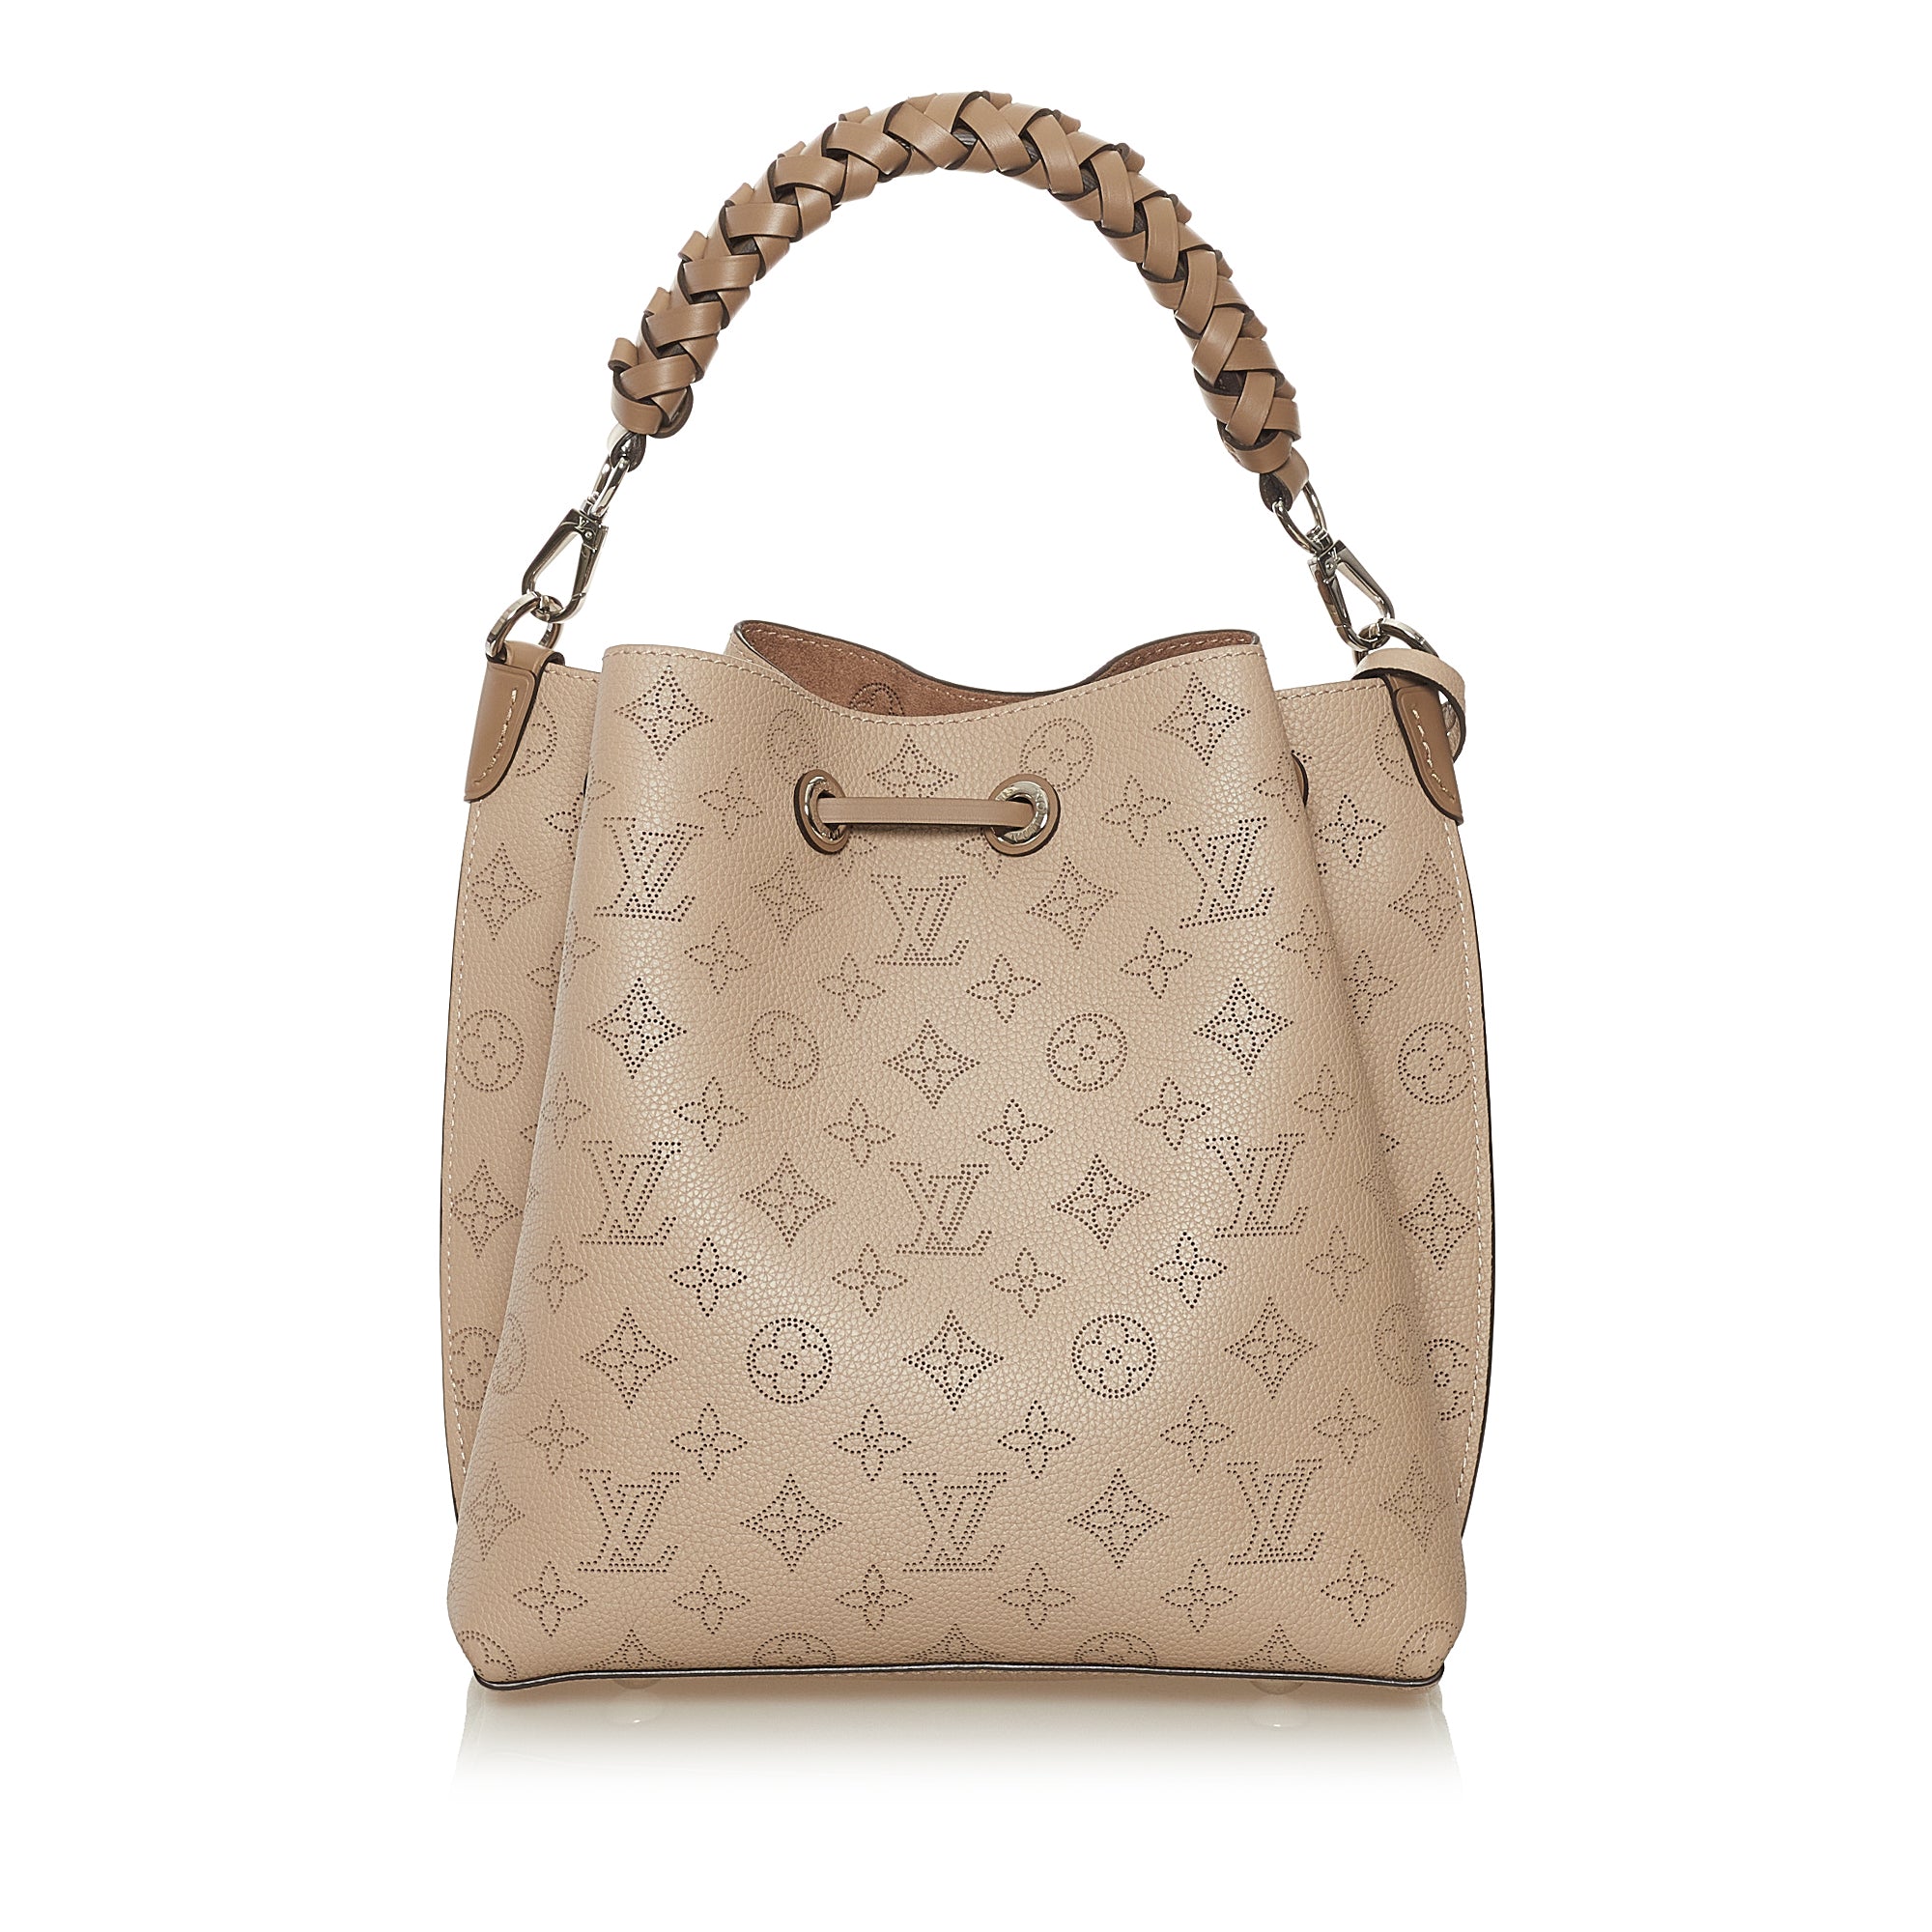 This beautiful Louis Vuitton Muria Mahina Shoulder bag sold in a